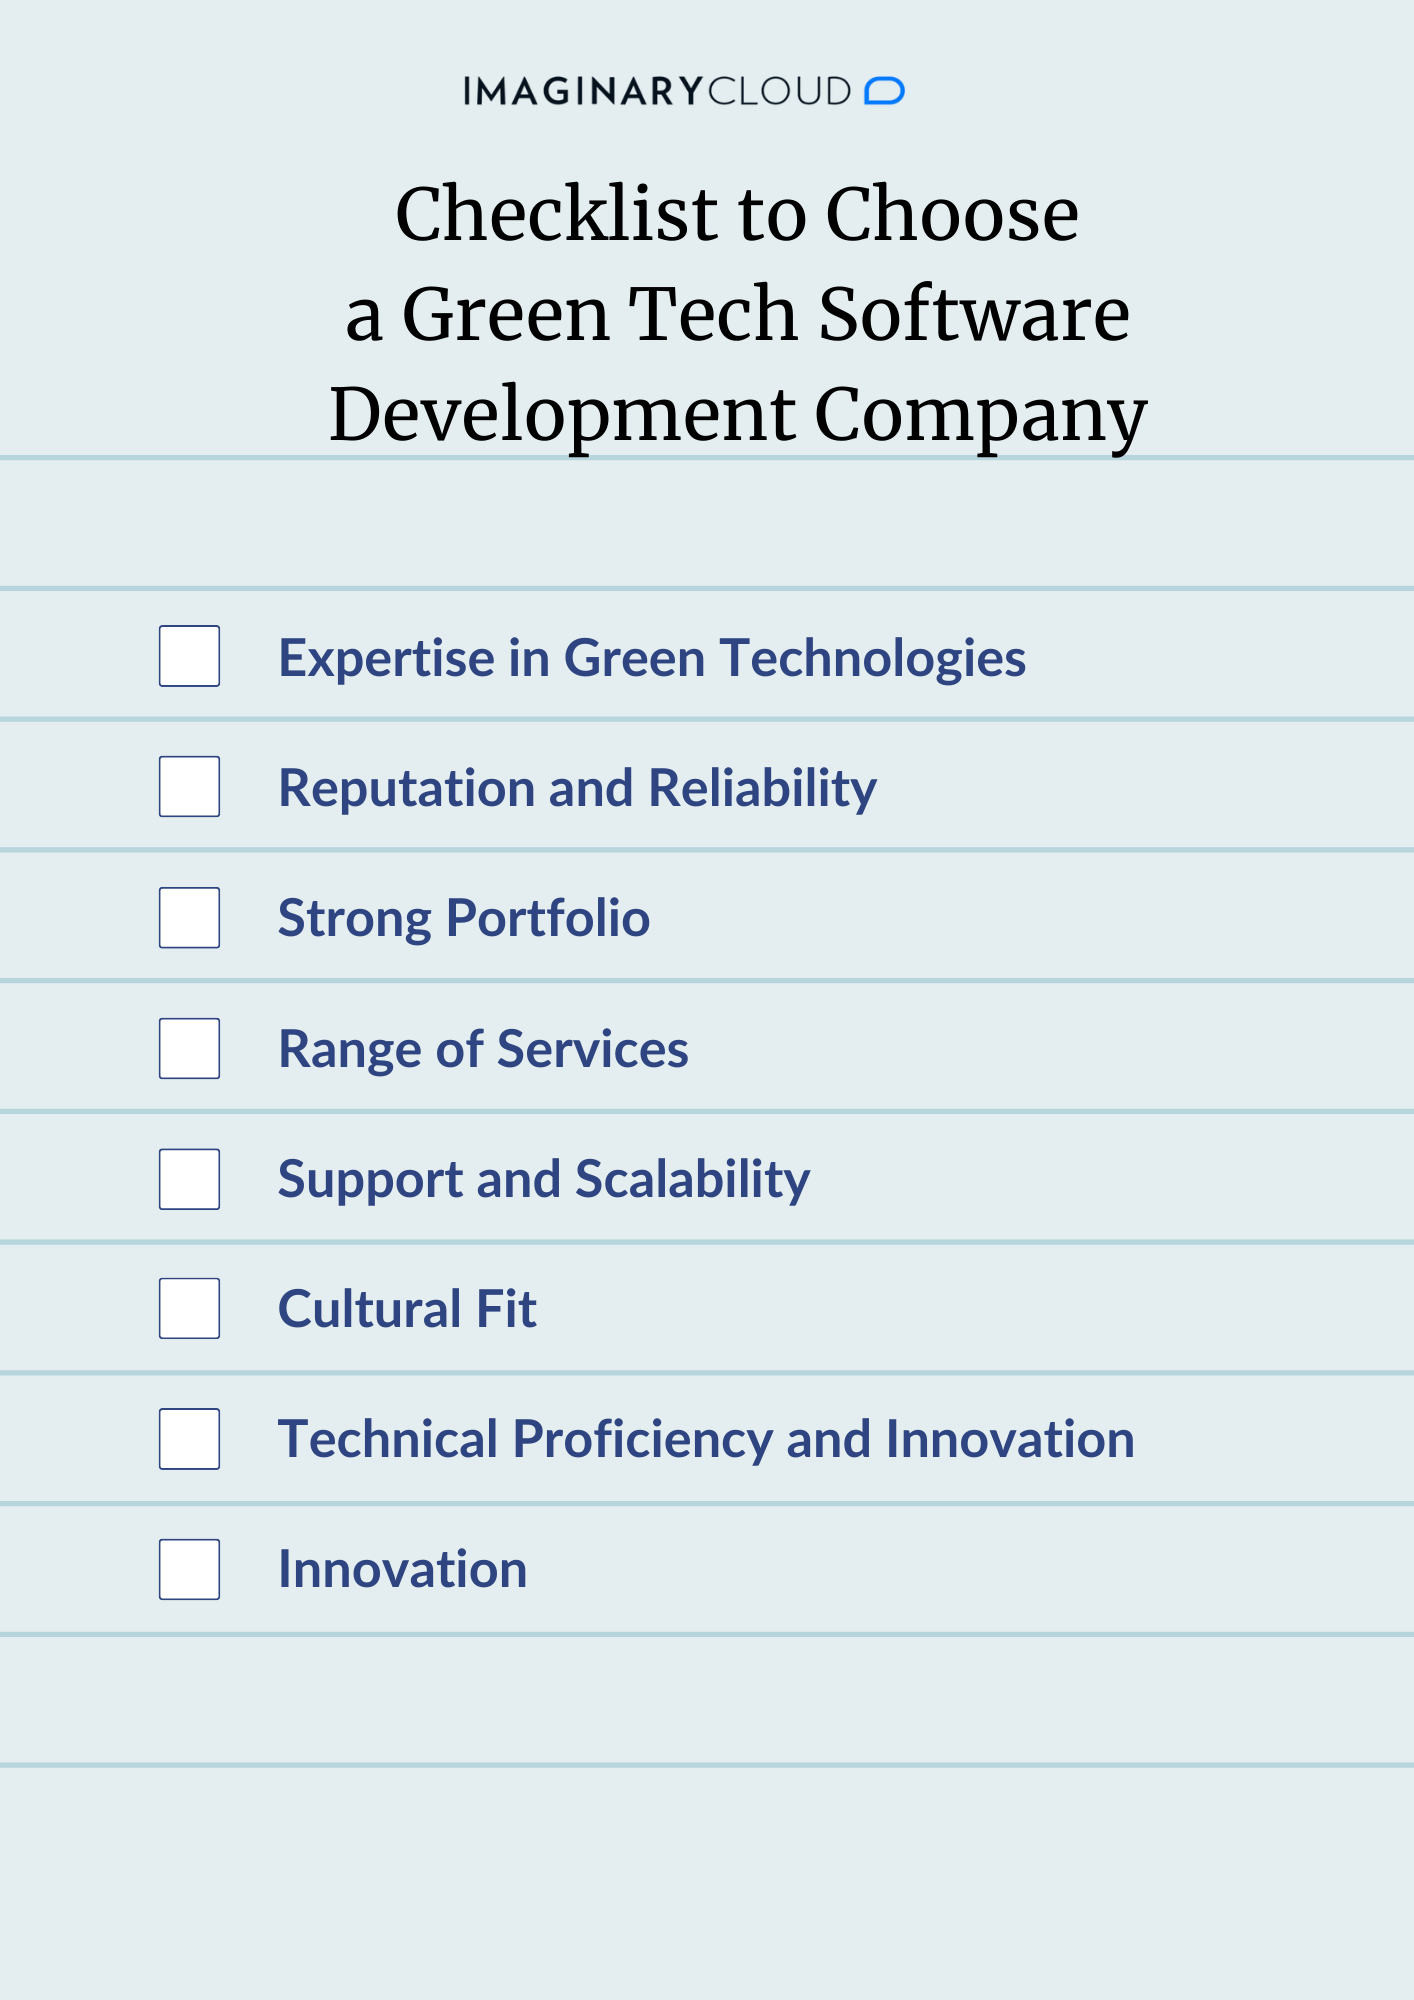 Checklist to Choose a Green Tech Software Development Company